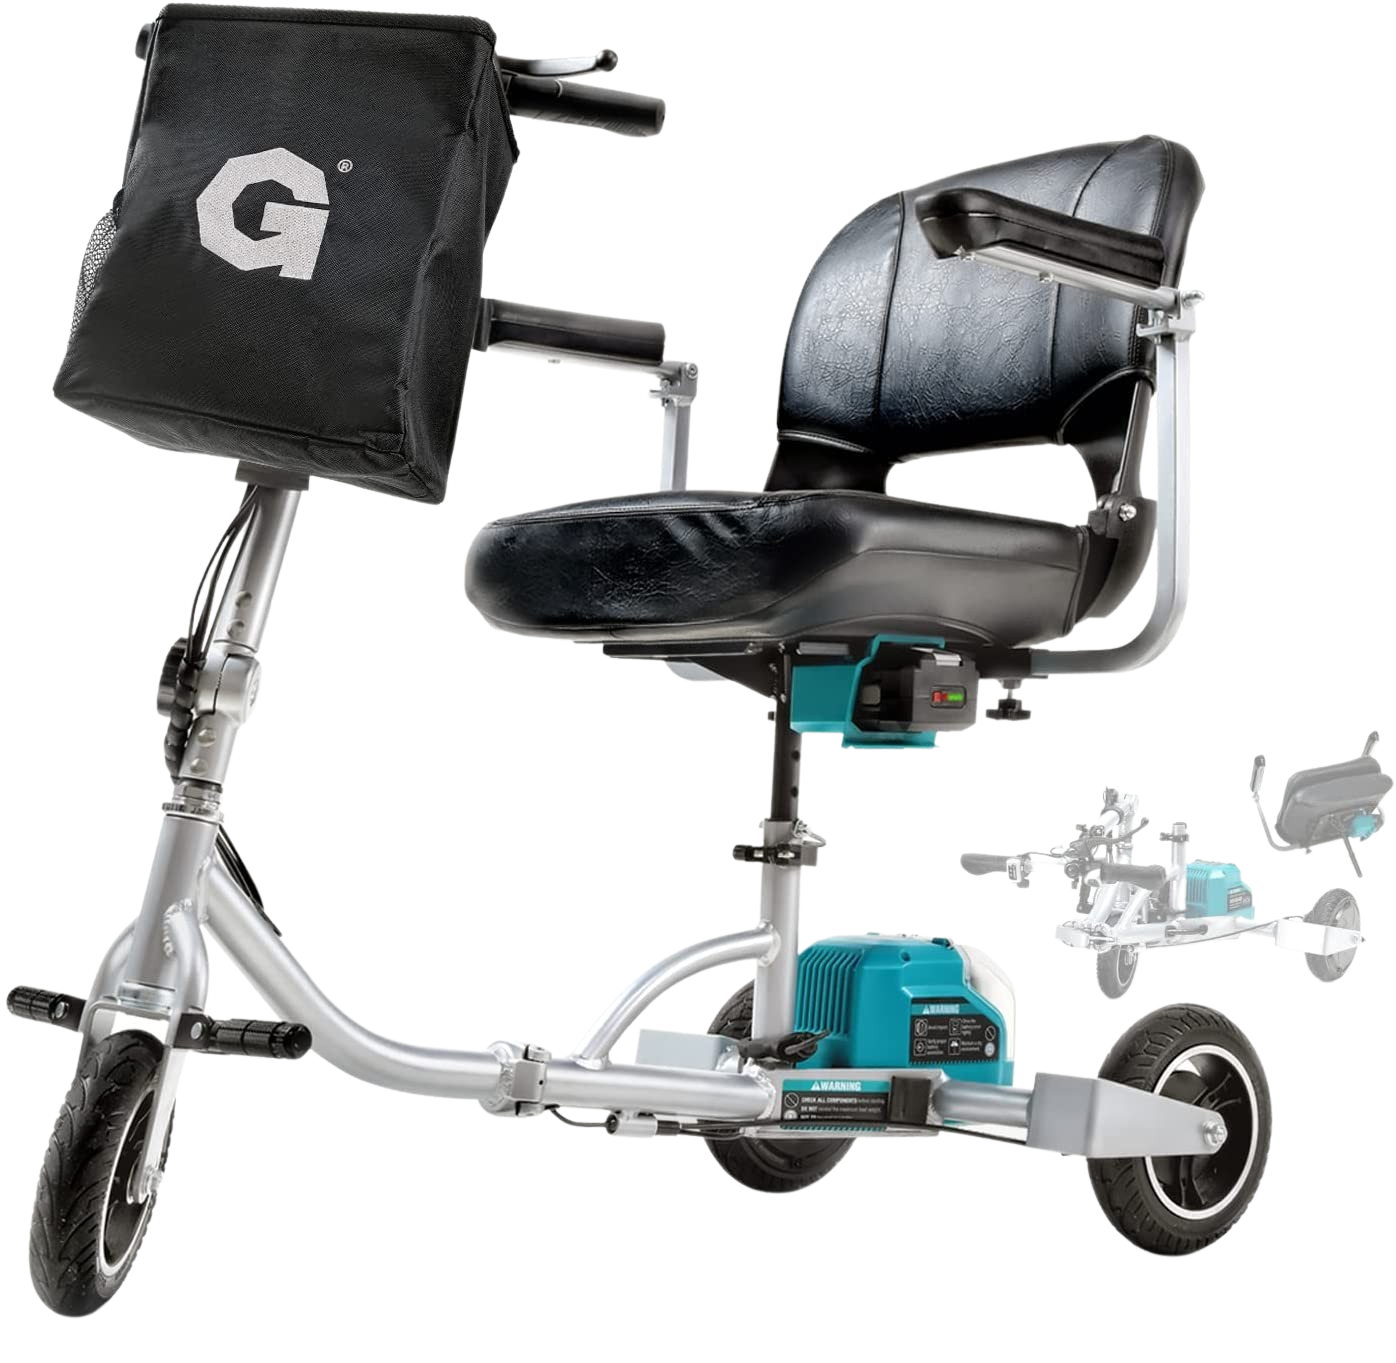 G GUT121 Mobility Scooter 3 Wheel Folding Plus Long Range Travel 2 Detachable 48V Lithium-ion Batteries New